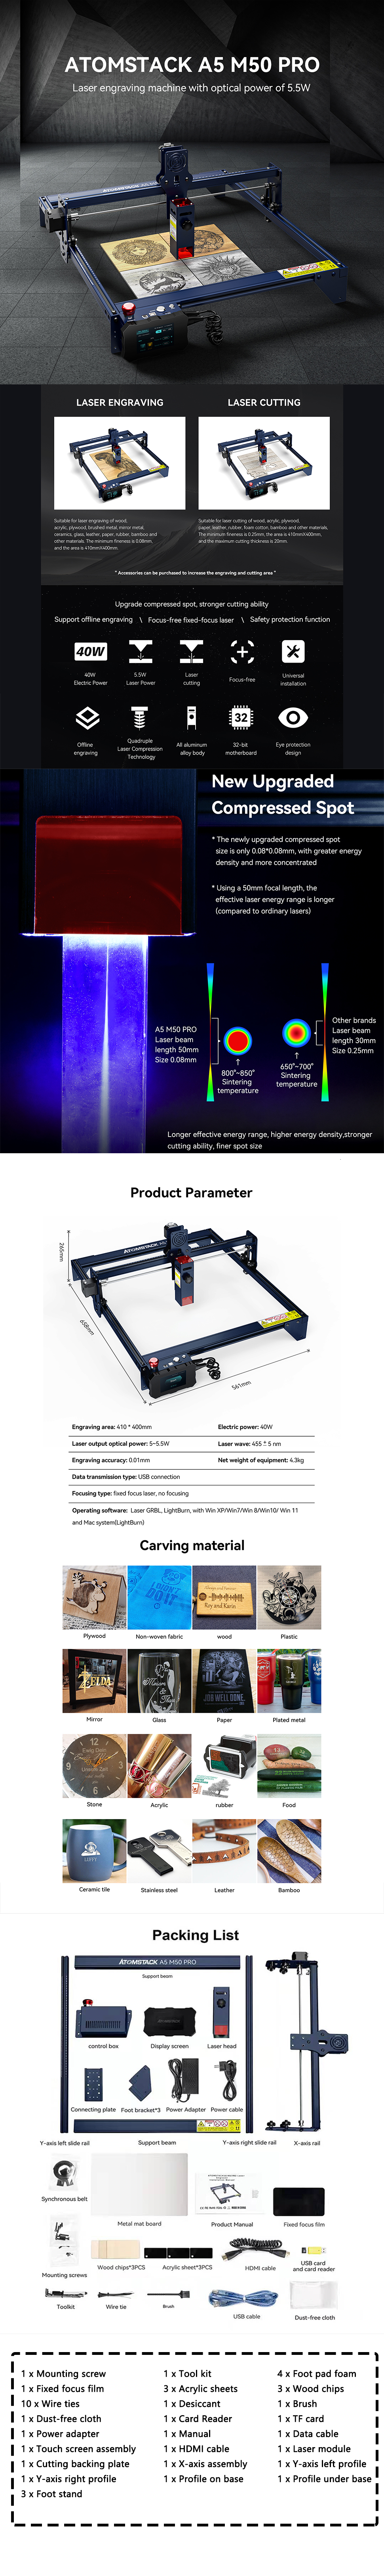 ATOMSTACK A5 M50 40W Laser Engraving Machine DIY CNC Laser Engraving  Cutting Engraving Fixed-Focus Ultra-Fine Laser - ChiTu Systems!